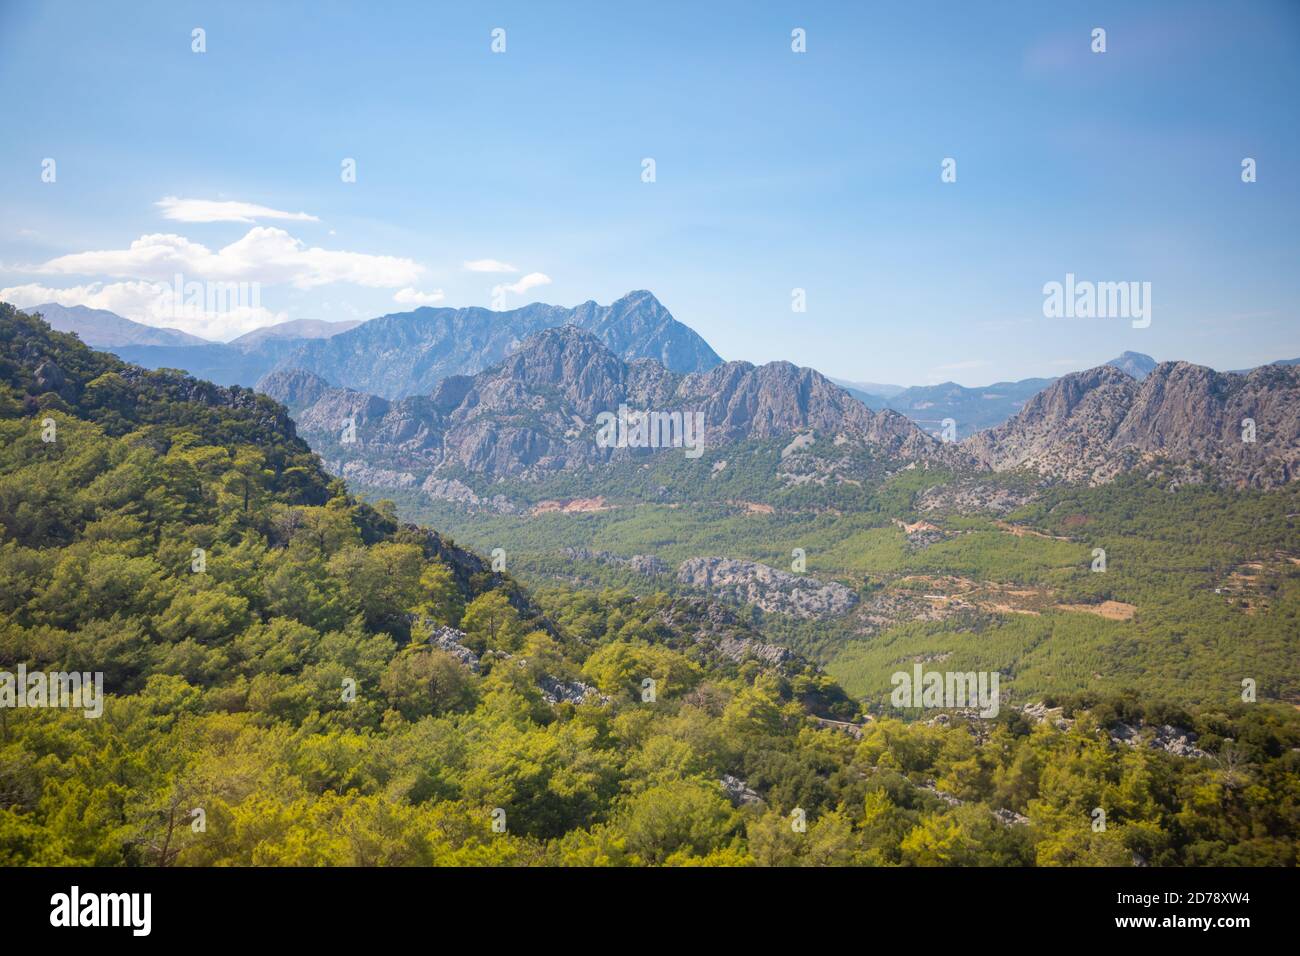 View from Tunektepe Cable car on mountains near Antalya, Turkey Stock Photo